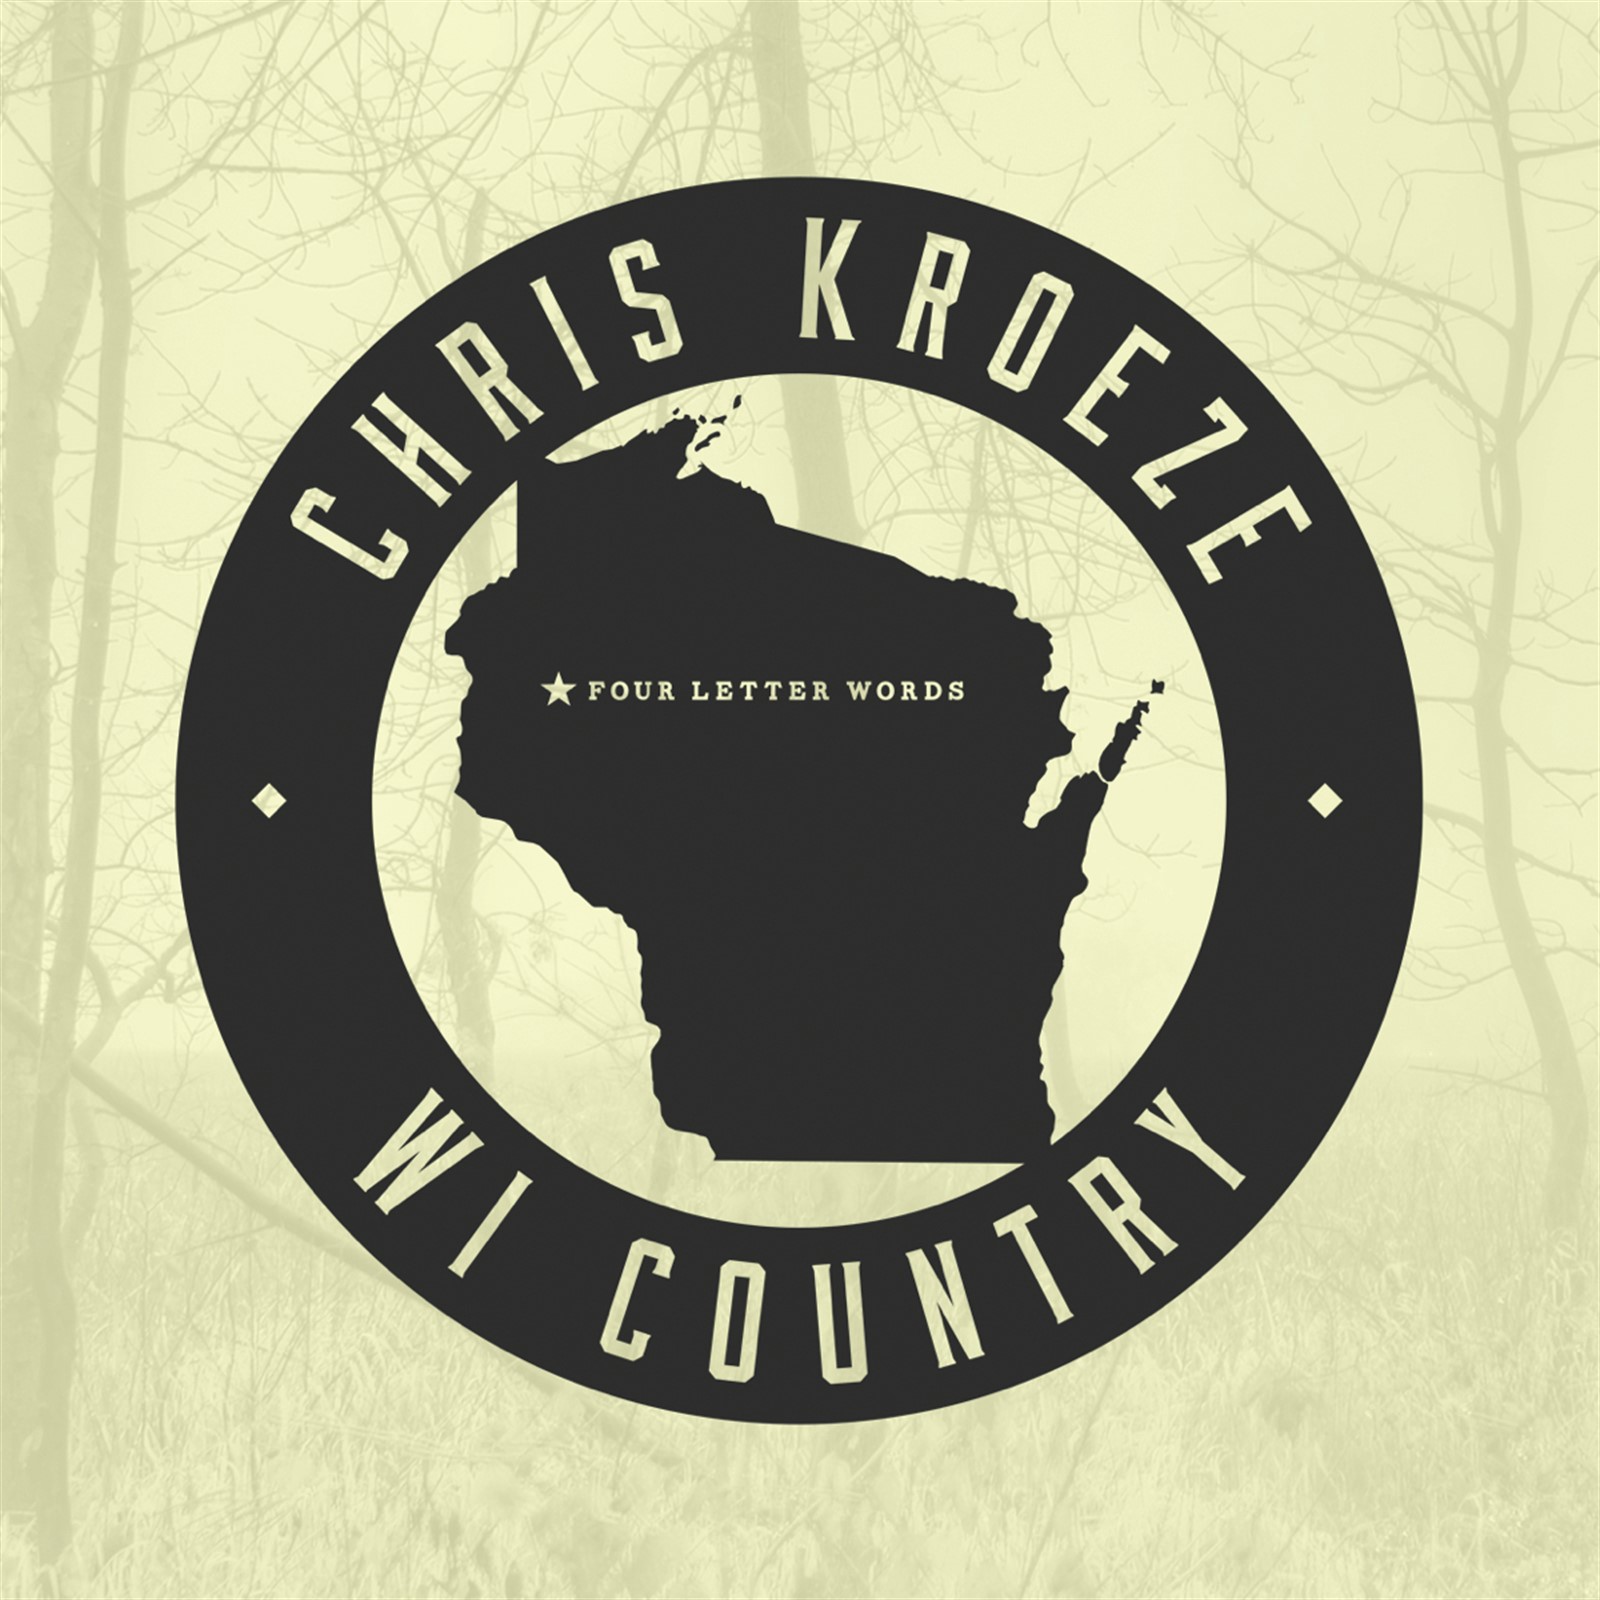 Chris Kroeze CD Cover_1600x1600.JPG